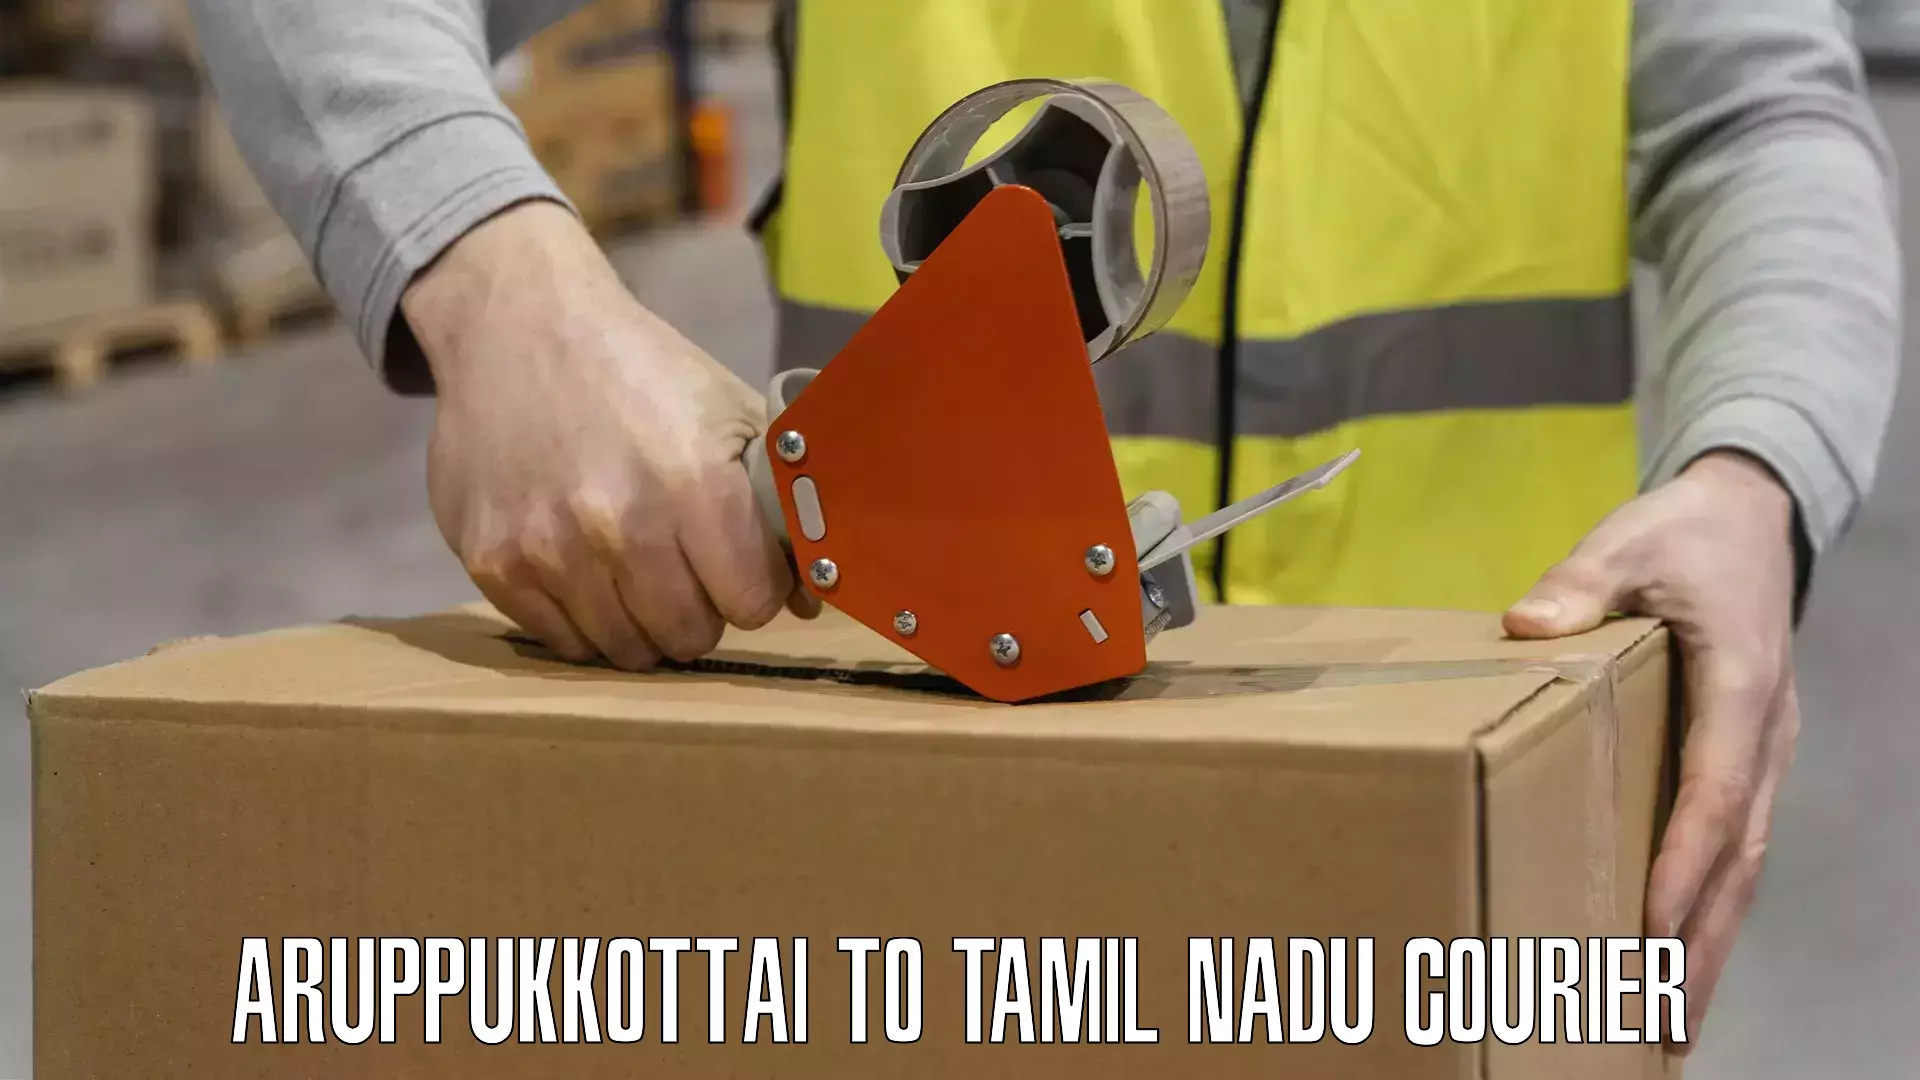 State-of-the-art courier technology Aruppukkottai to Chennai